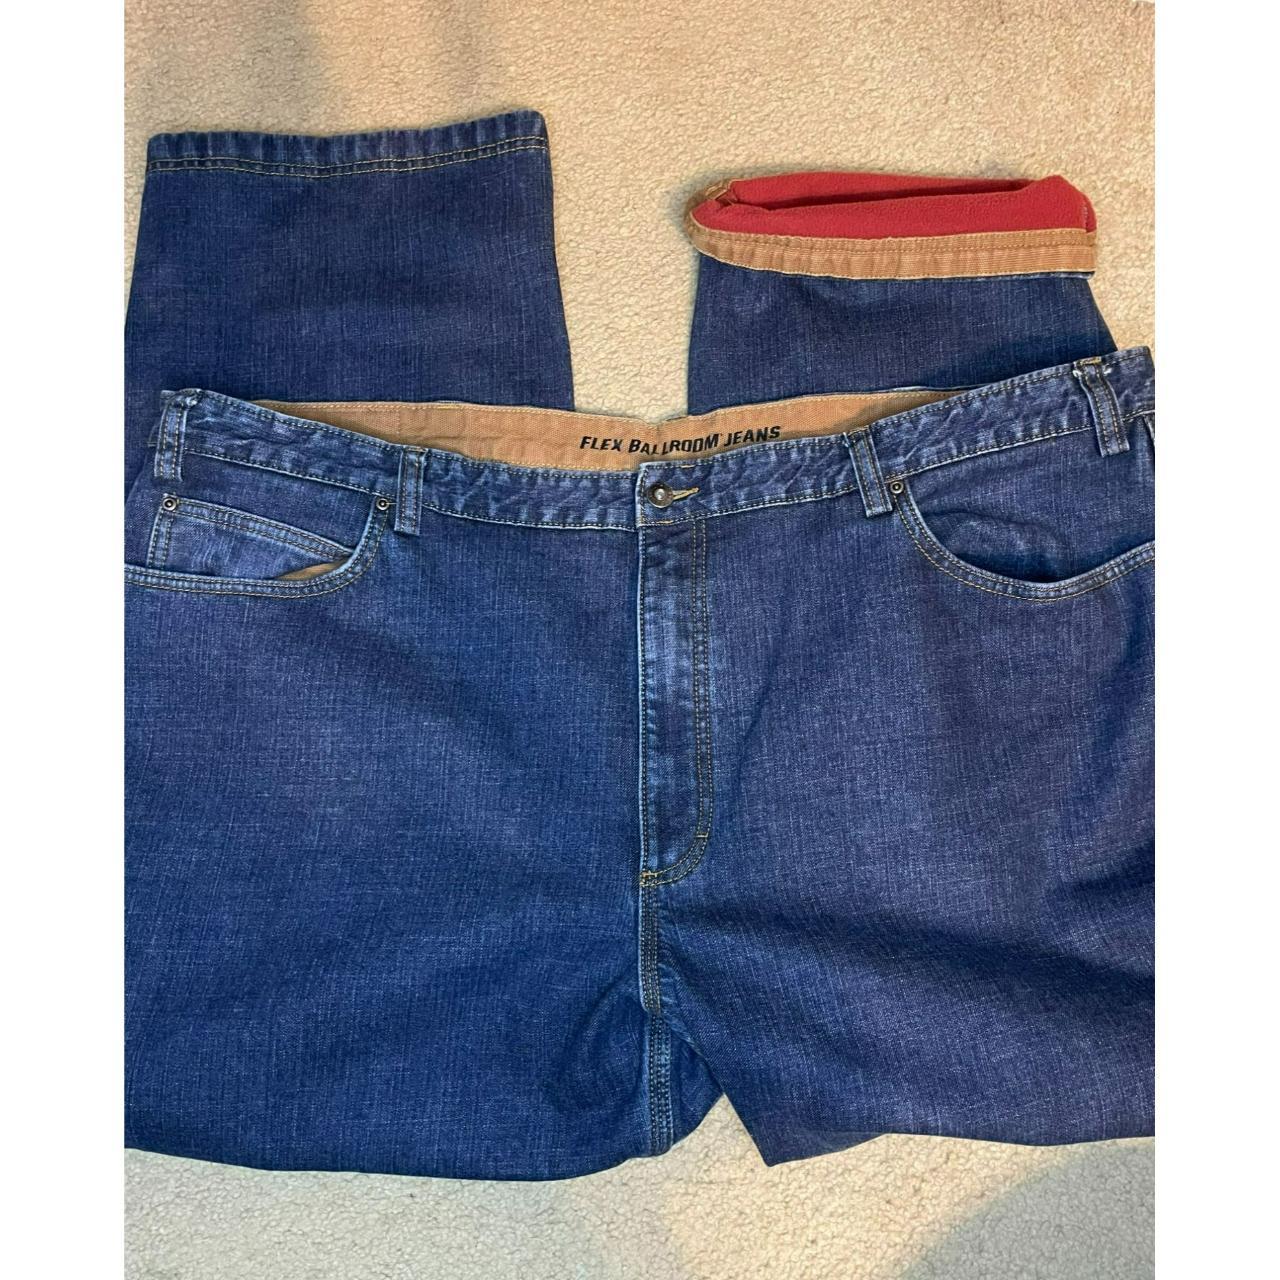 Duluth Men's Lined Jeans Flex Ballroom Jeans Size 48x30 - Depop